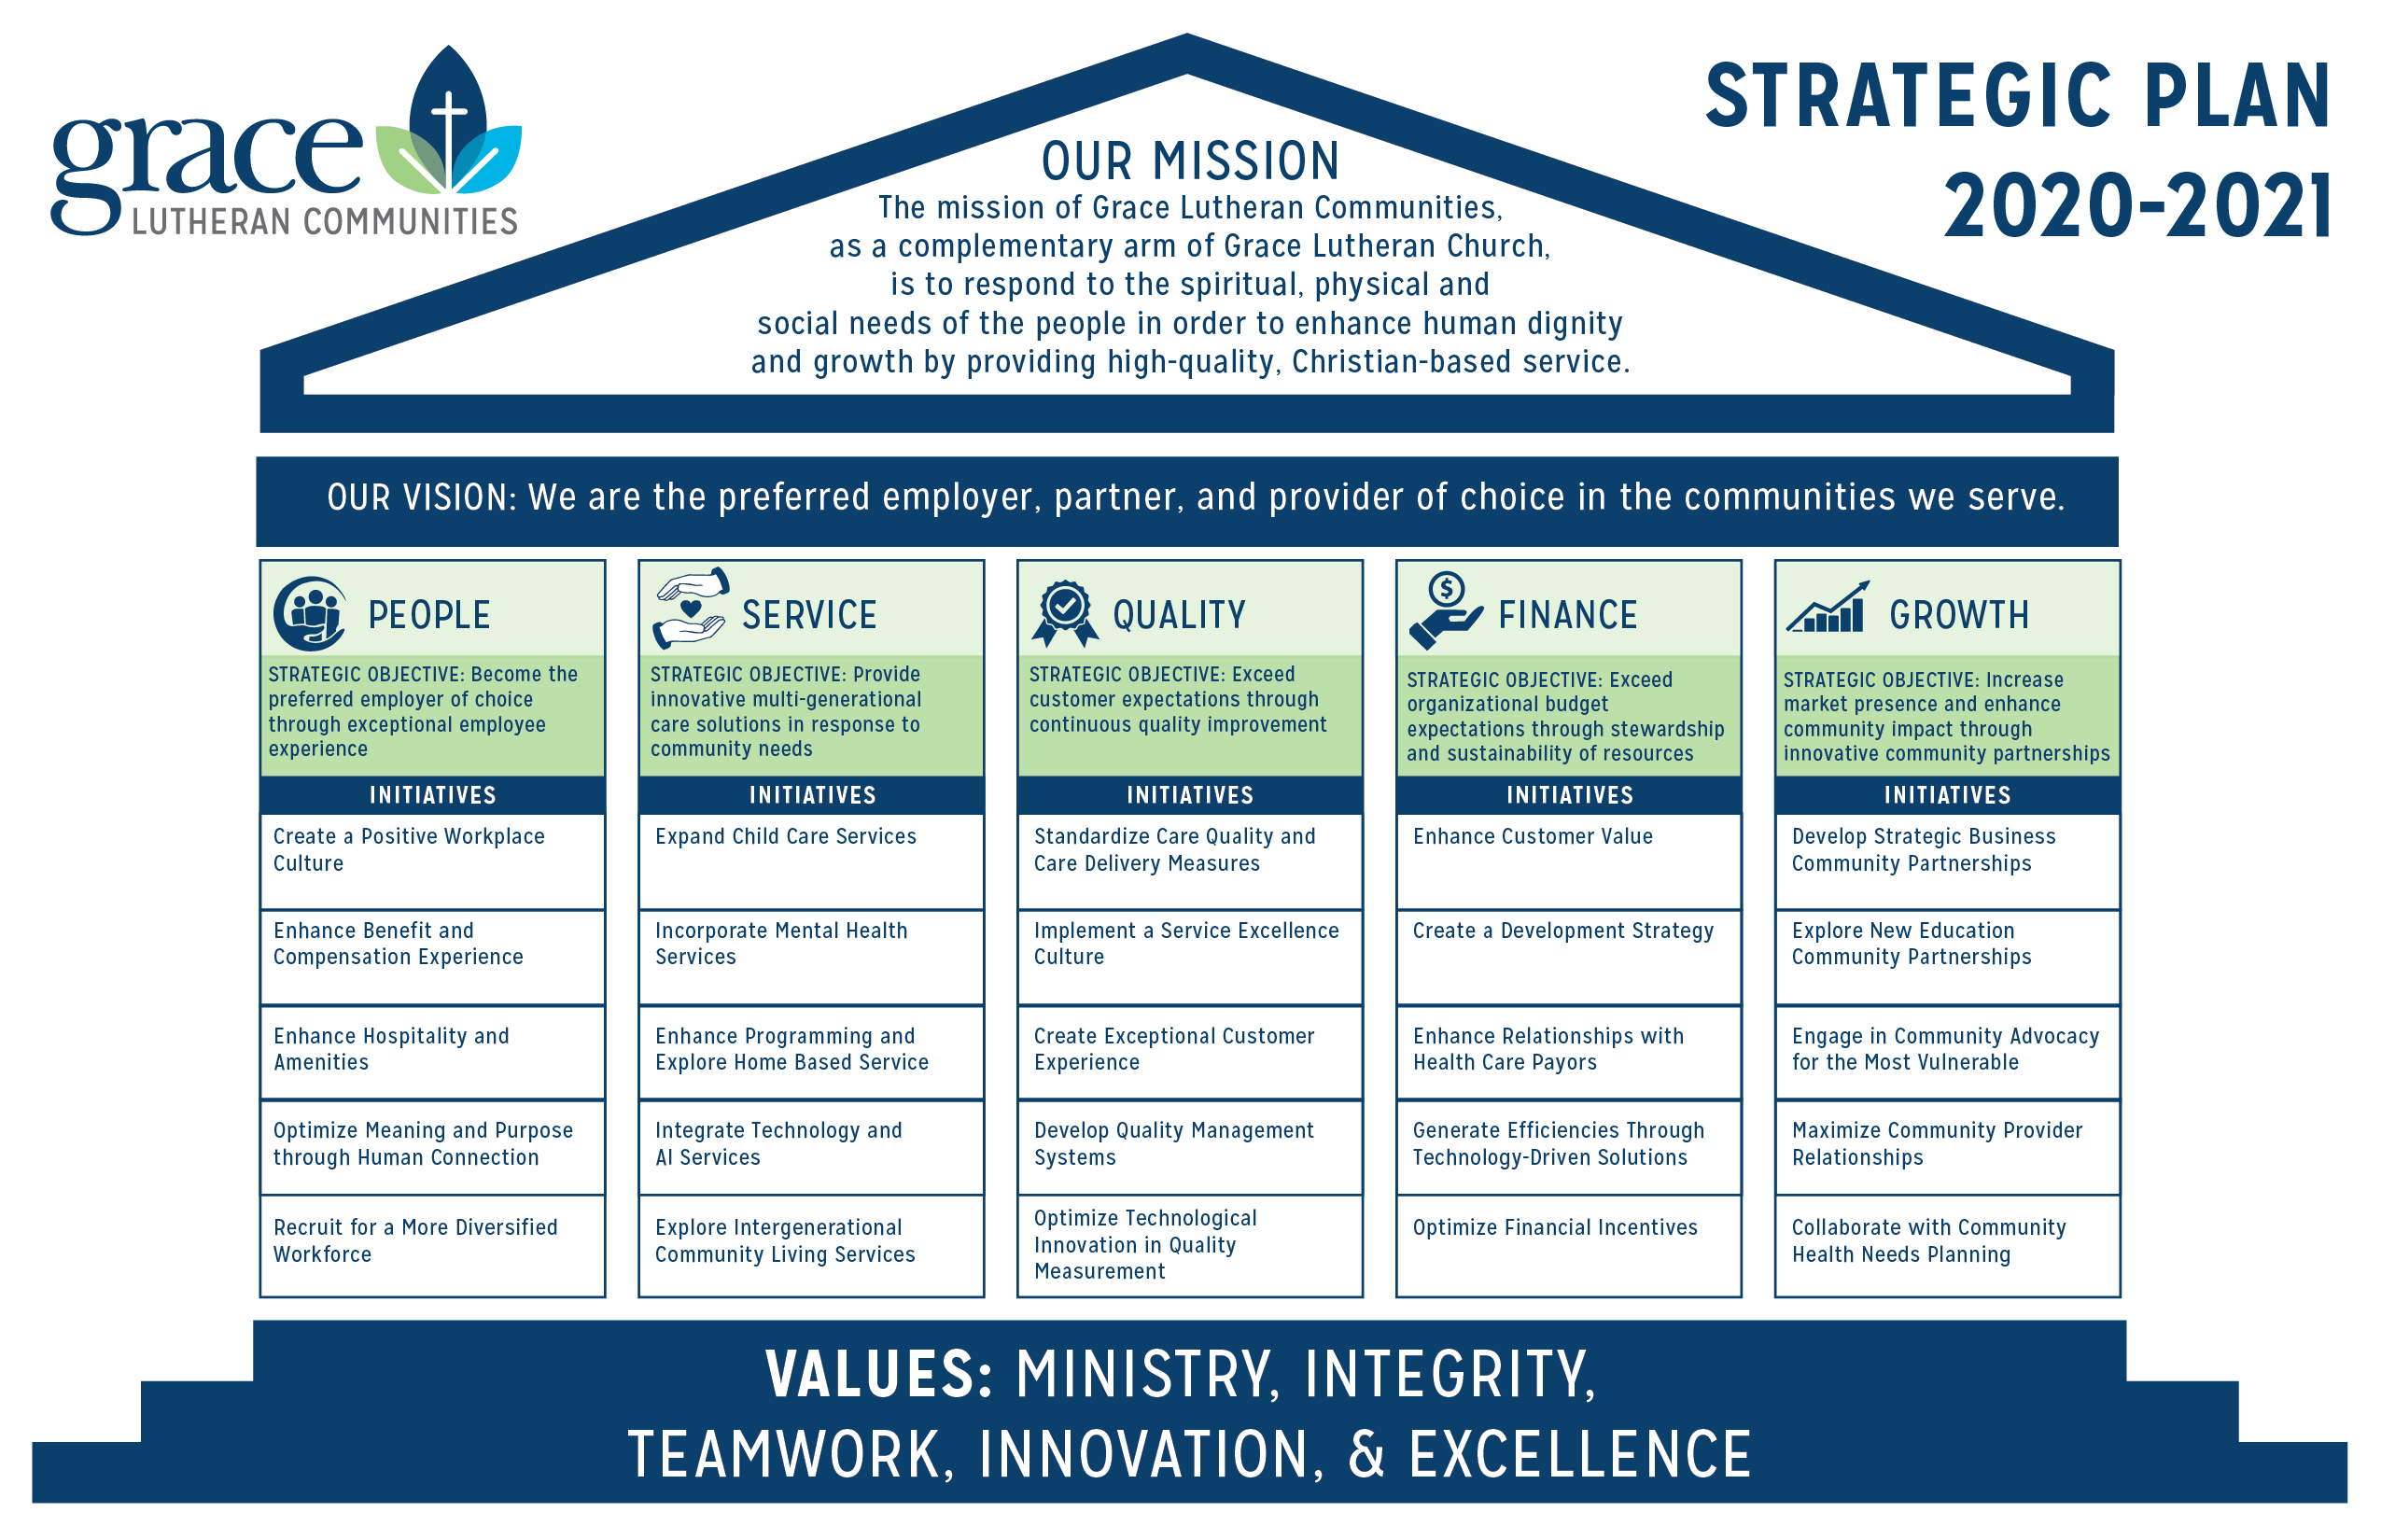 Our Strategic Planning Goals - Spiritt Family Services